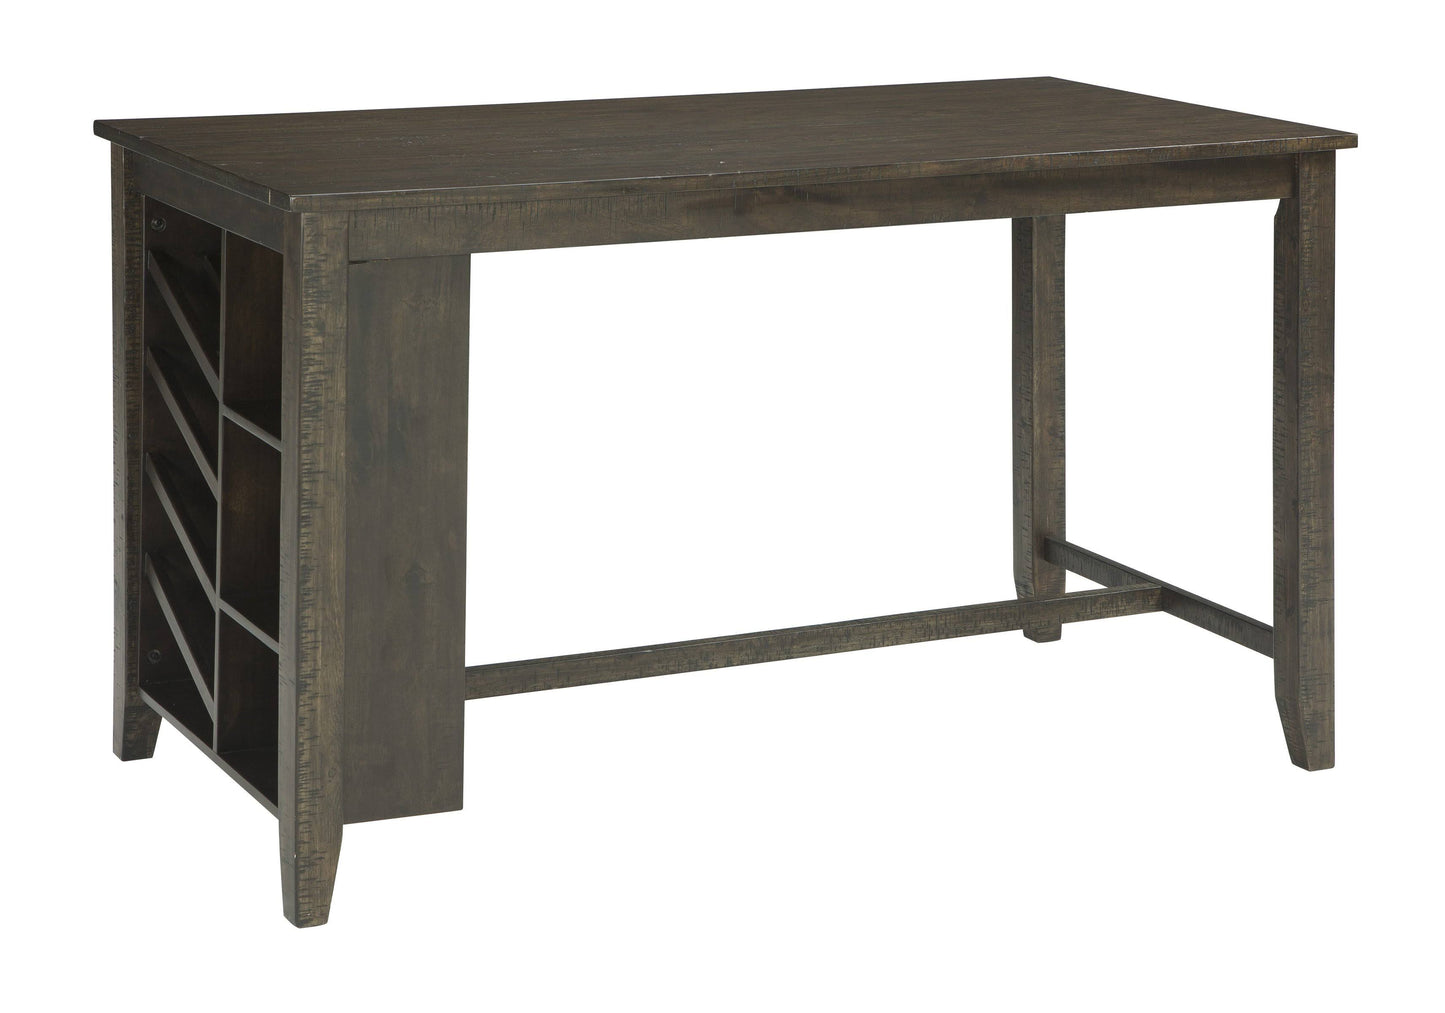 Furniture Rokane Rectangular Counter Table With Storage, Brown